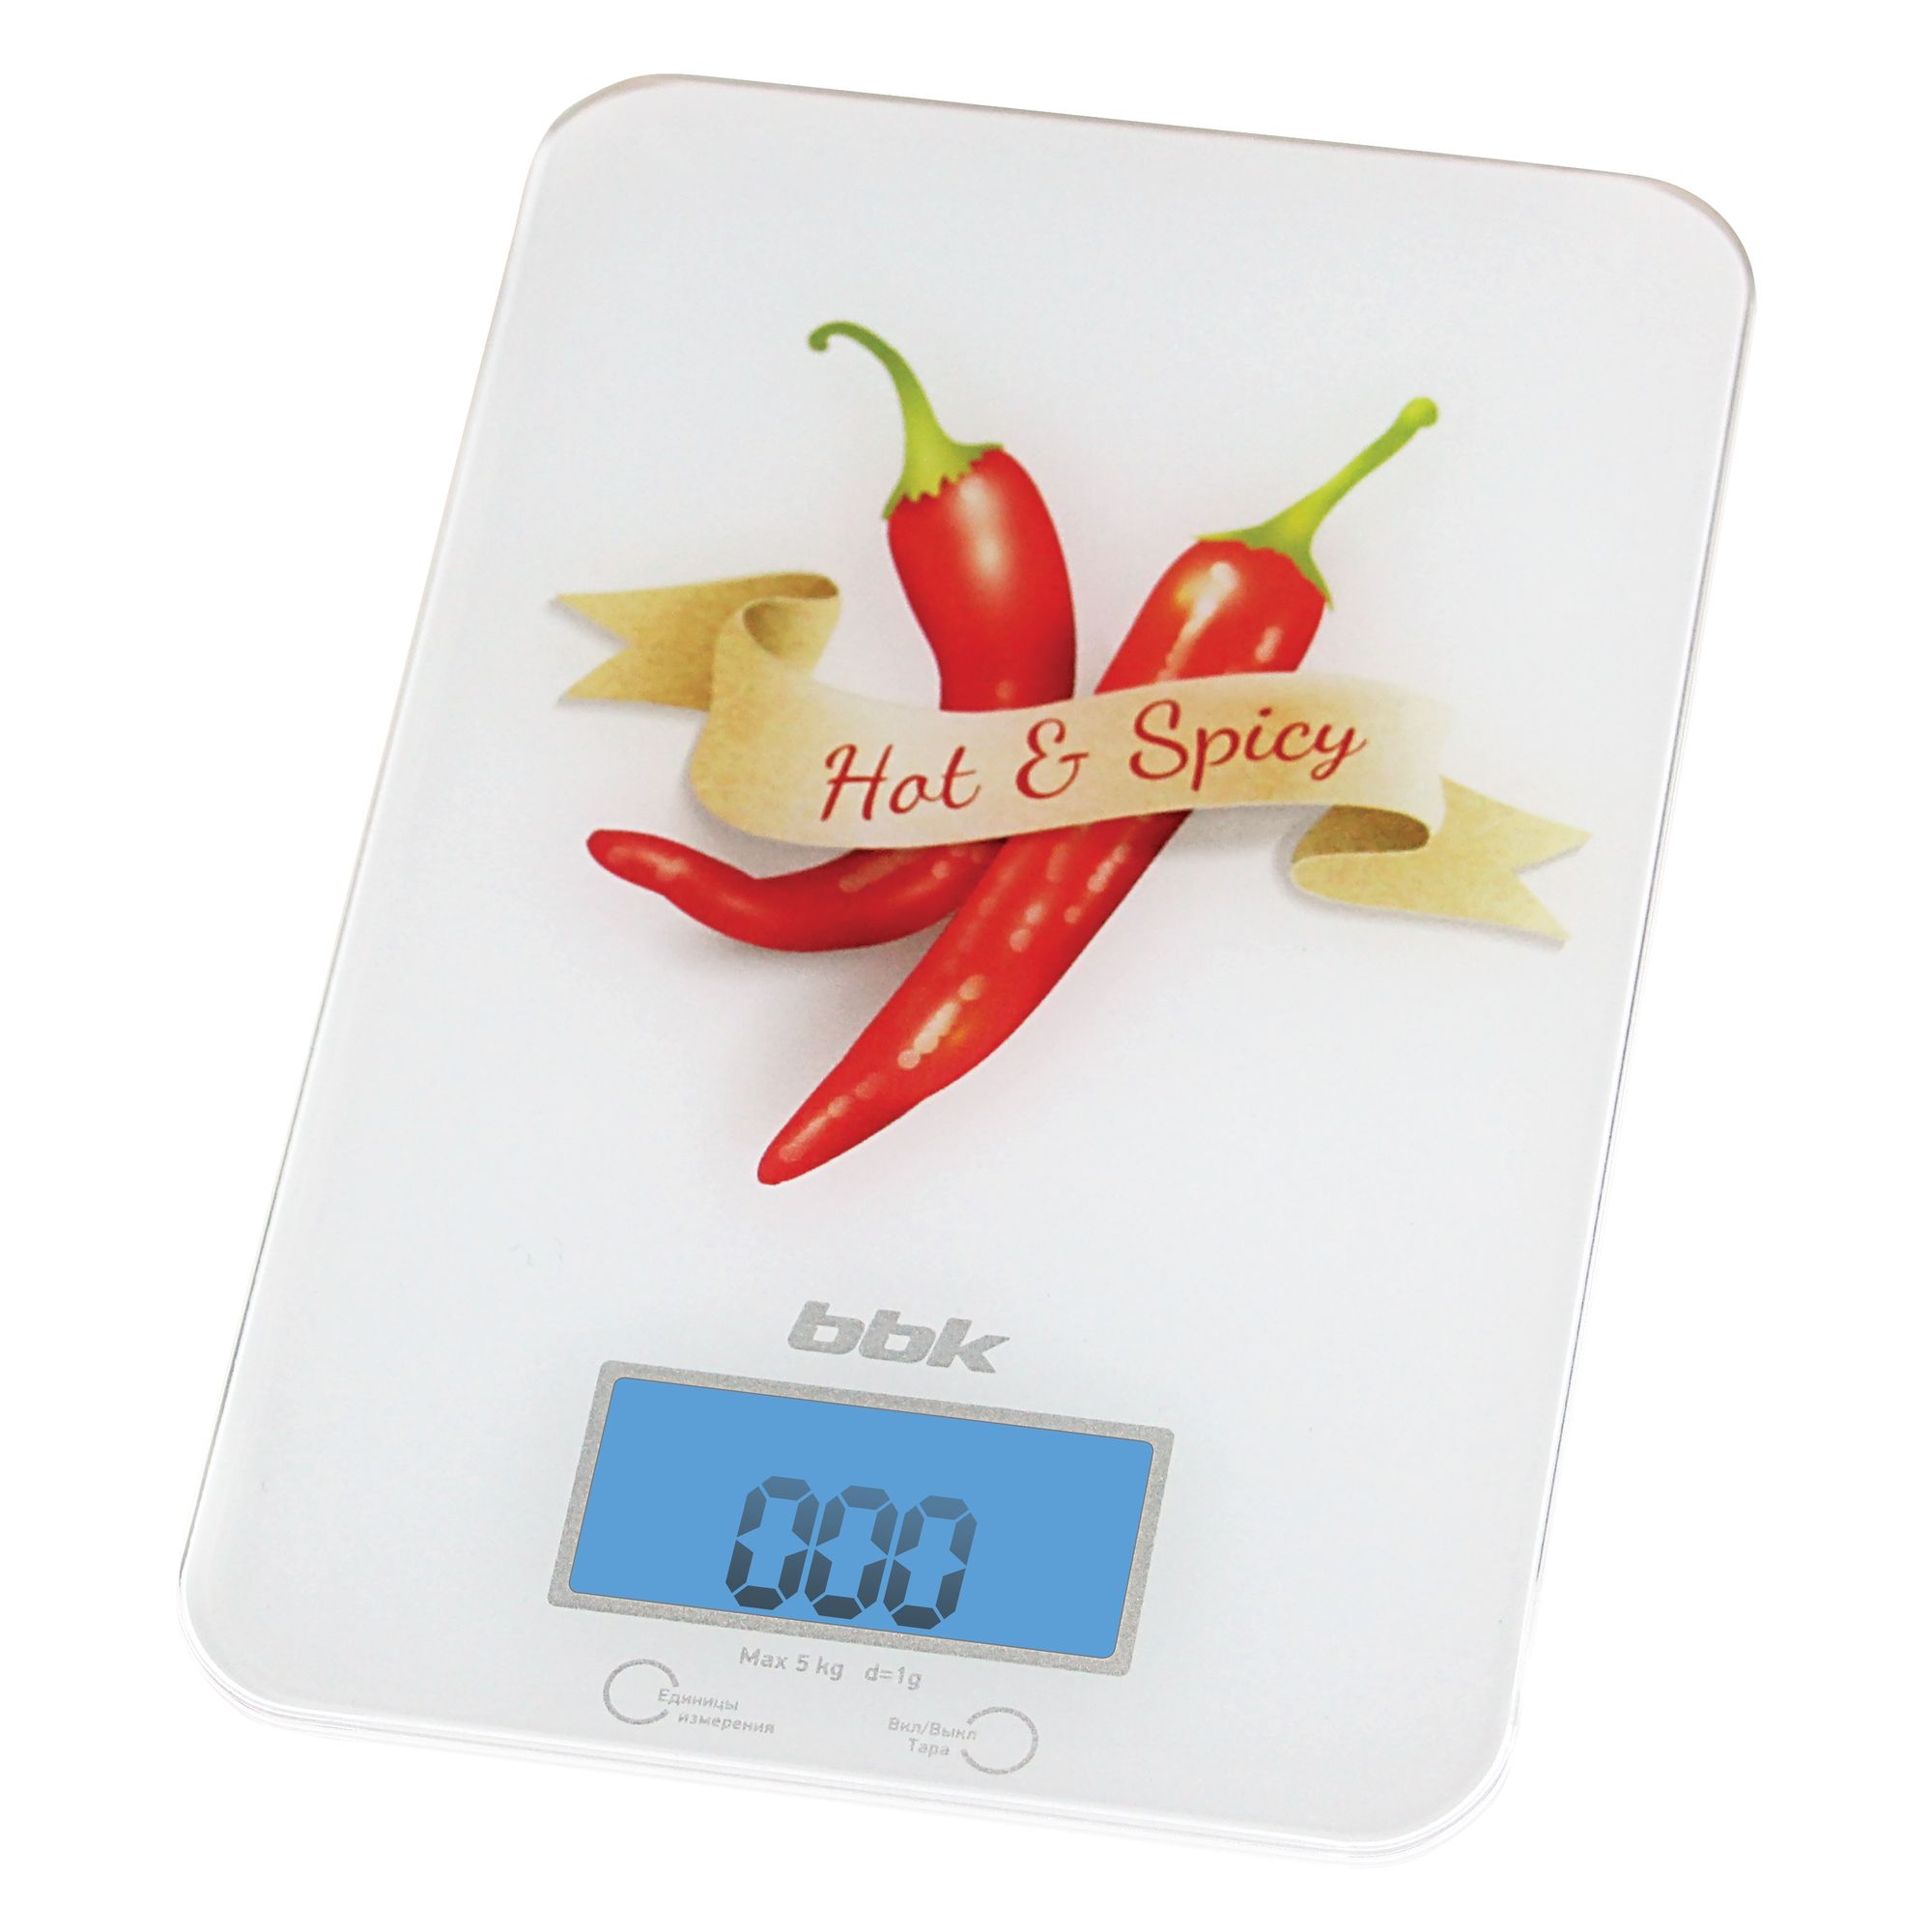 Кухонные весы электронные BBK KS106G 5 кг, белый/красный (KS106G), цвет белый/красный